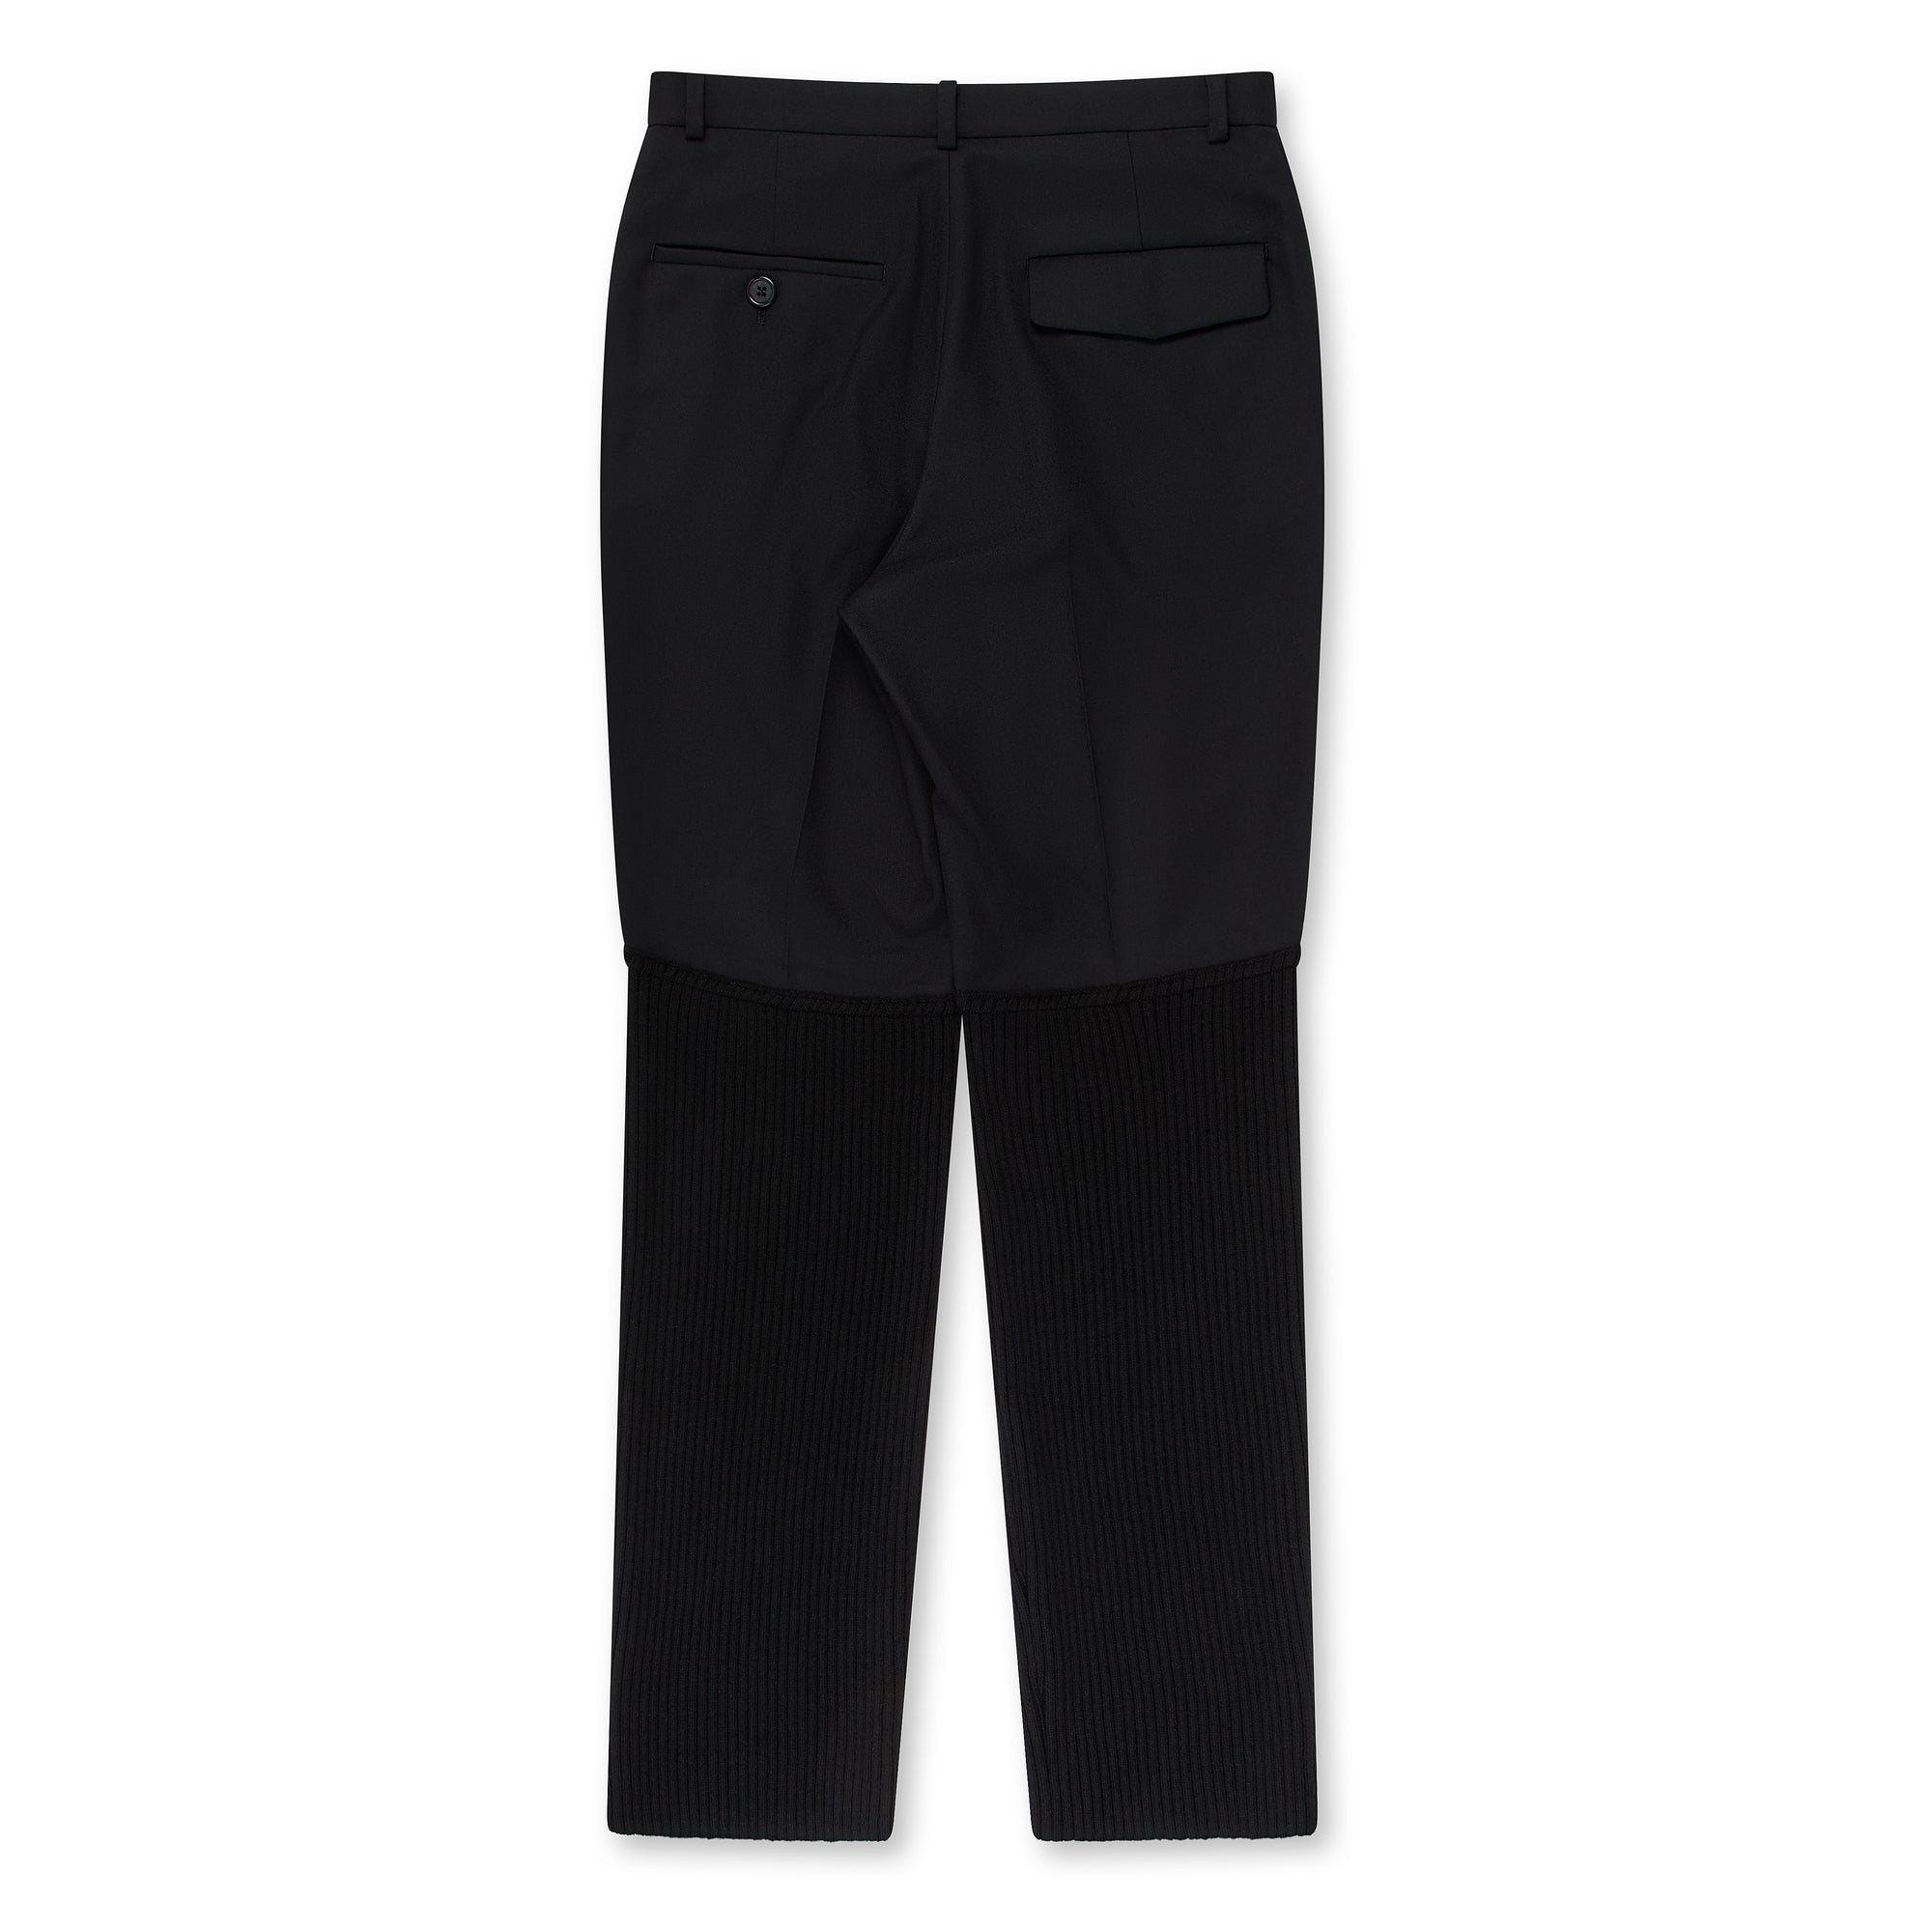 Undercover - Women’s Contrast Corduroy Trousers - (Black) view 2